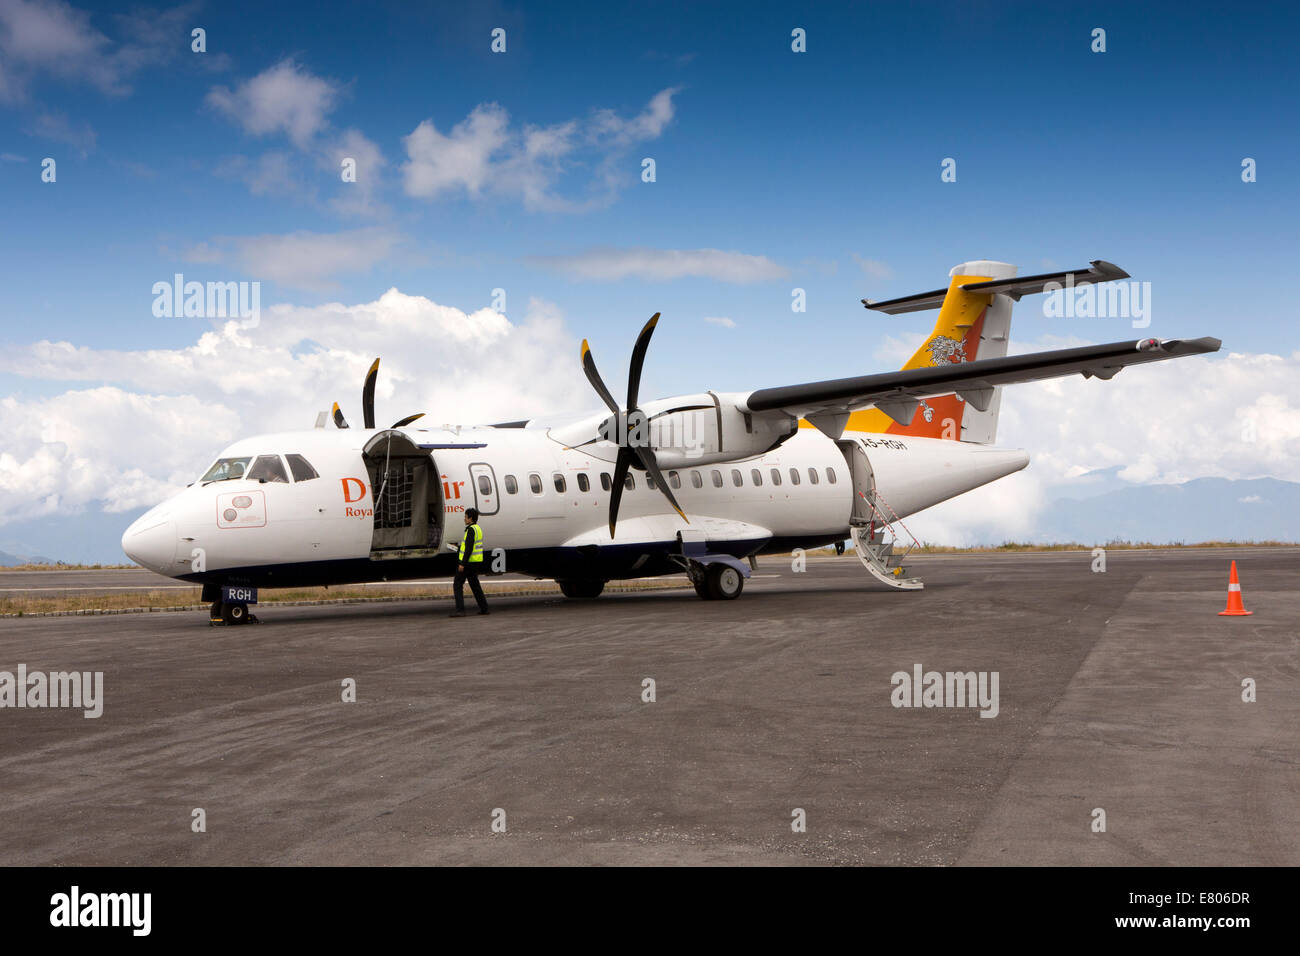 Eastern Bhutan, Yongphula, Airport Druk Air ATR 42-500 aircraft on ...